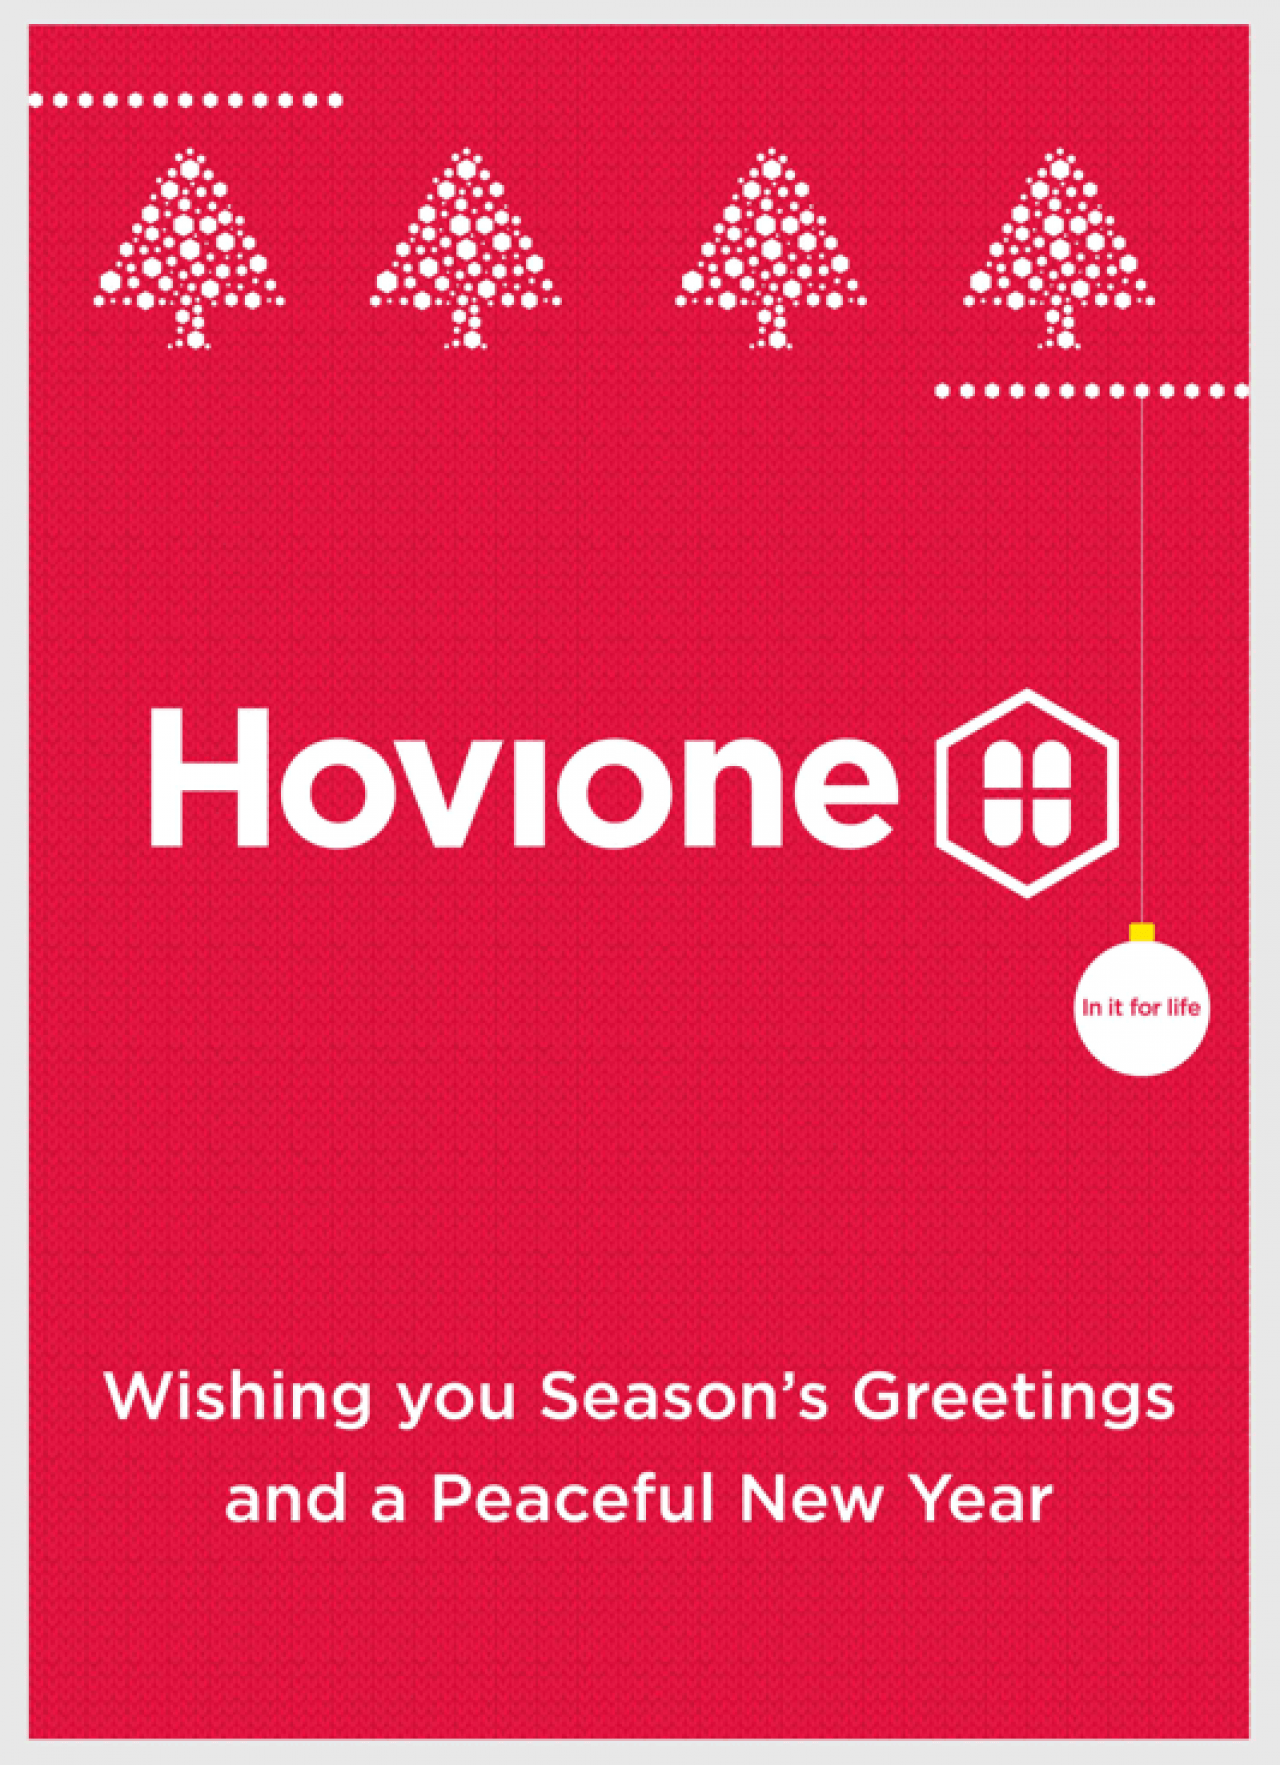 Season's Greetings from Hovione Card | Hovione